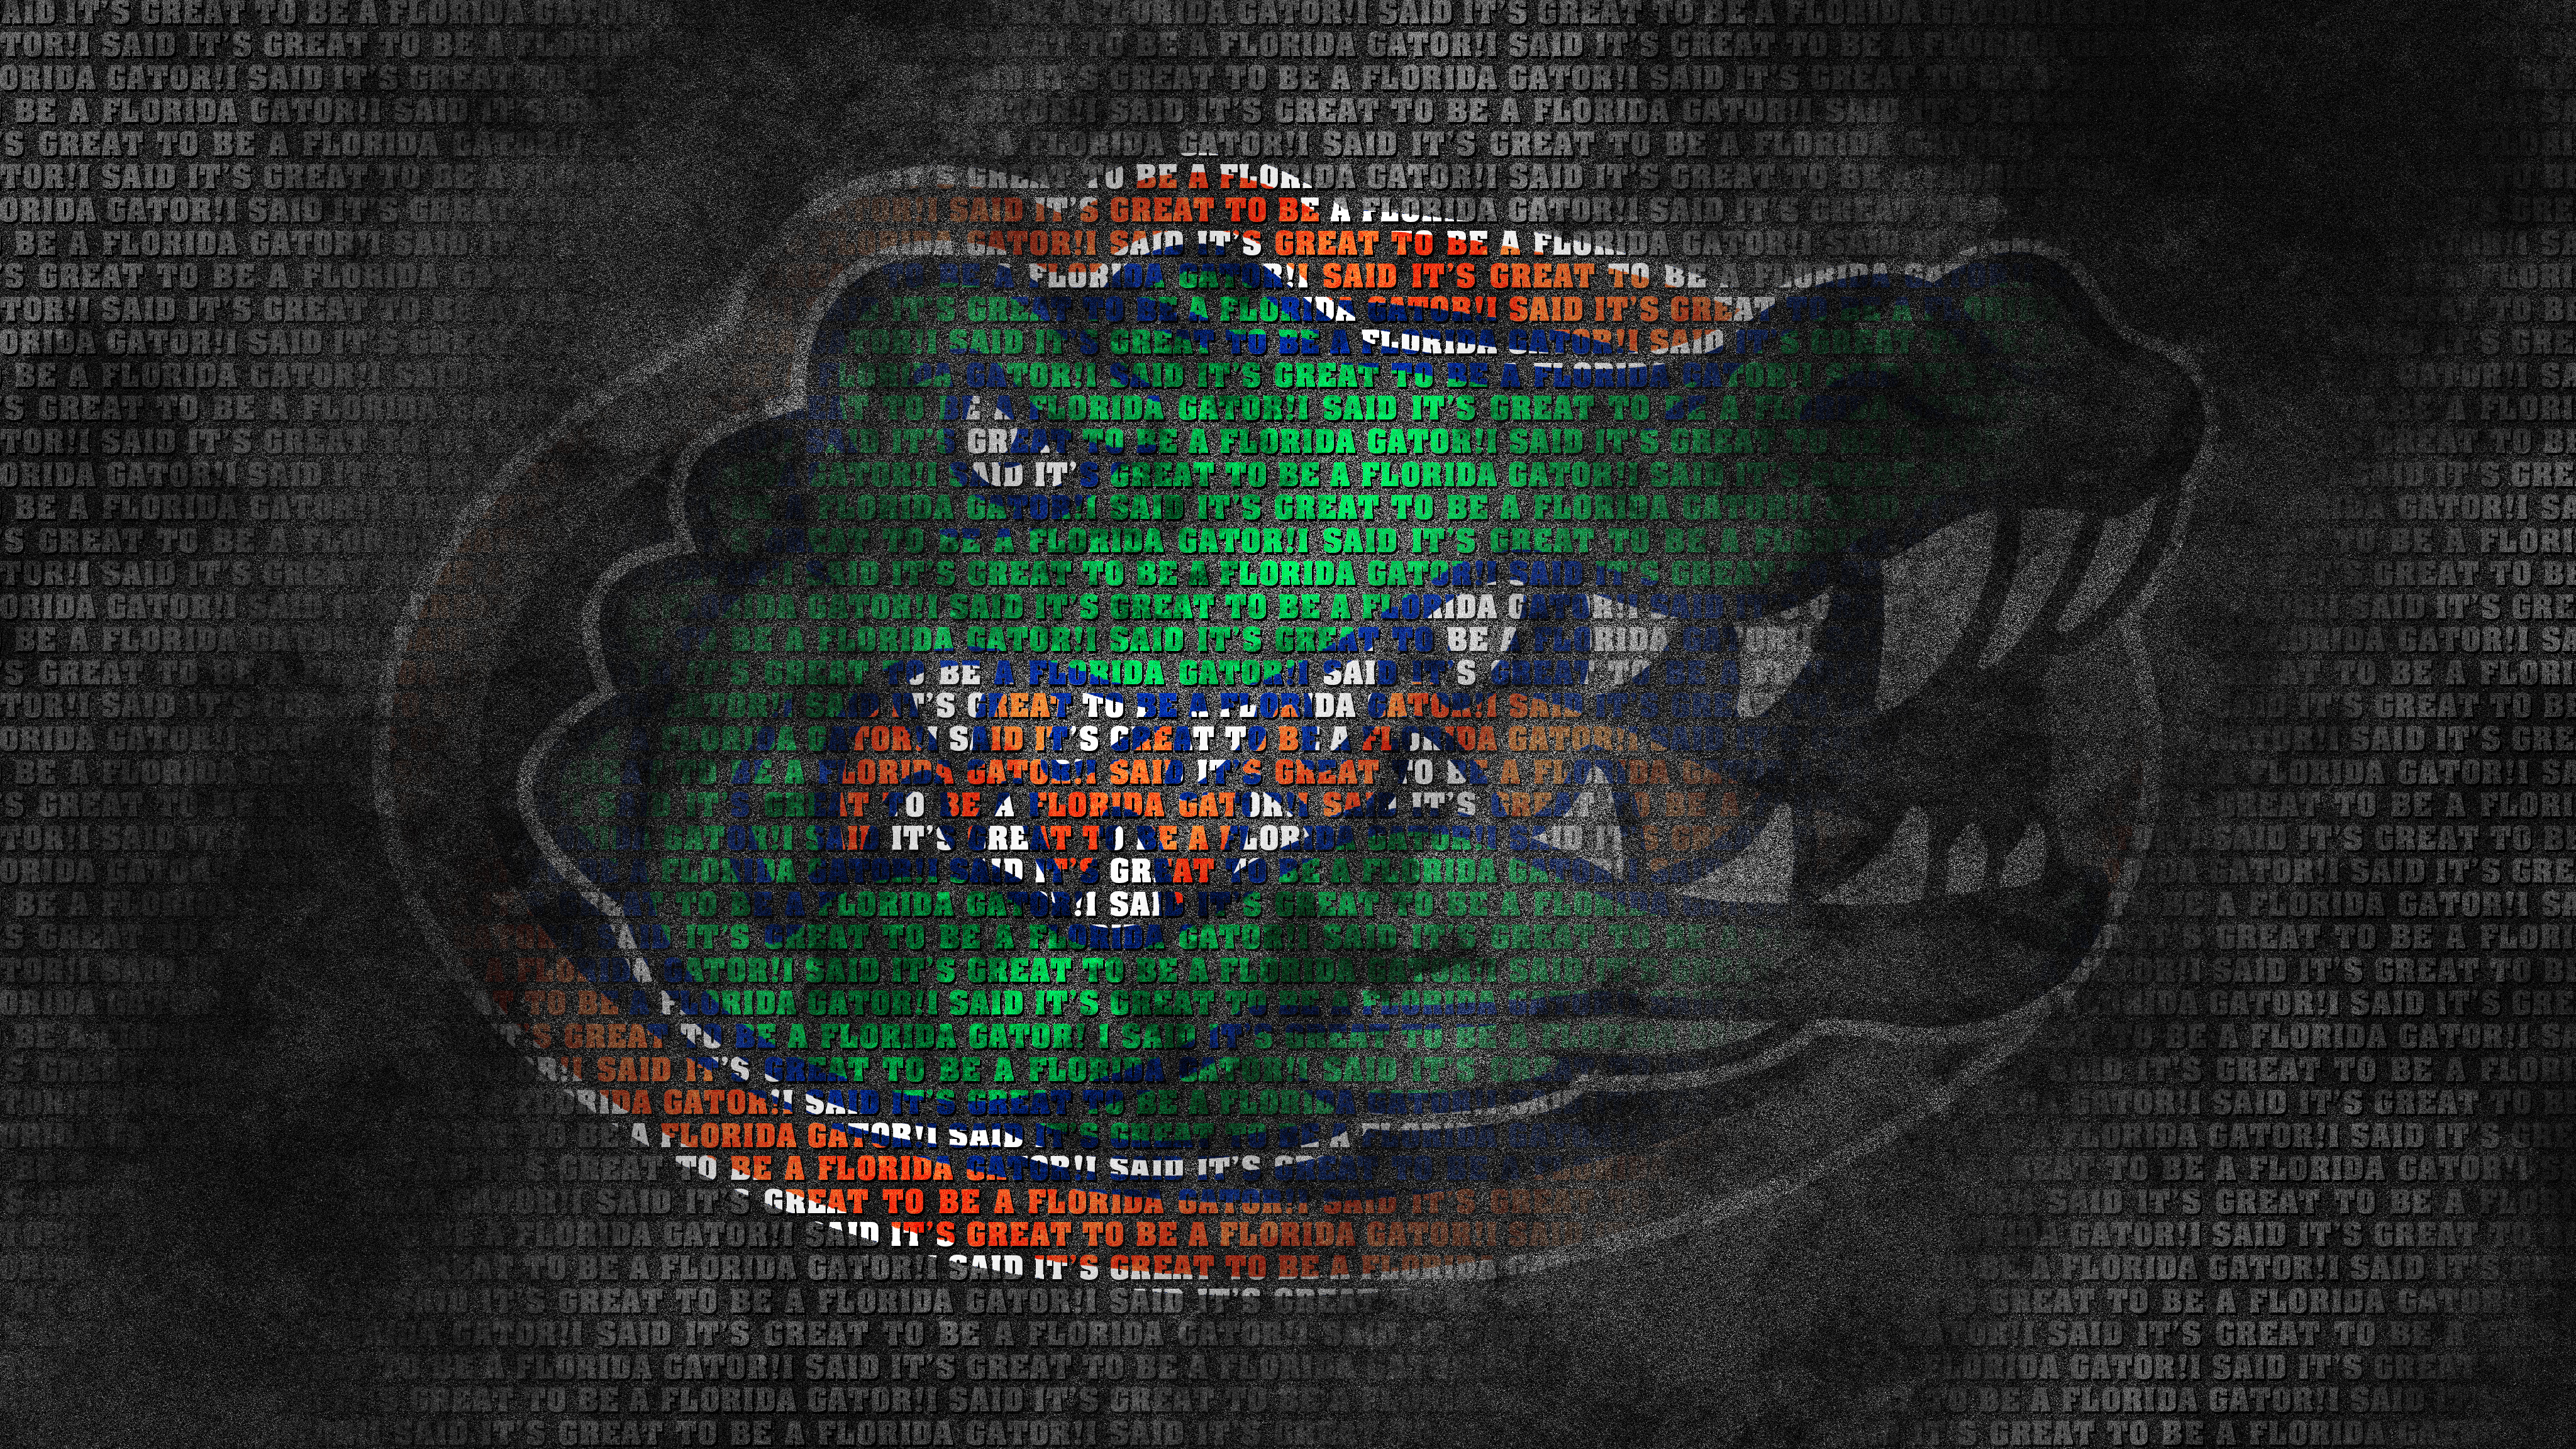 Florida gators desktop wallpaper